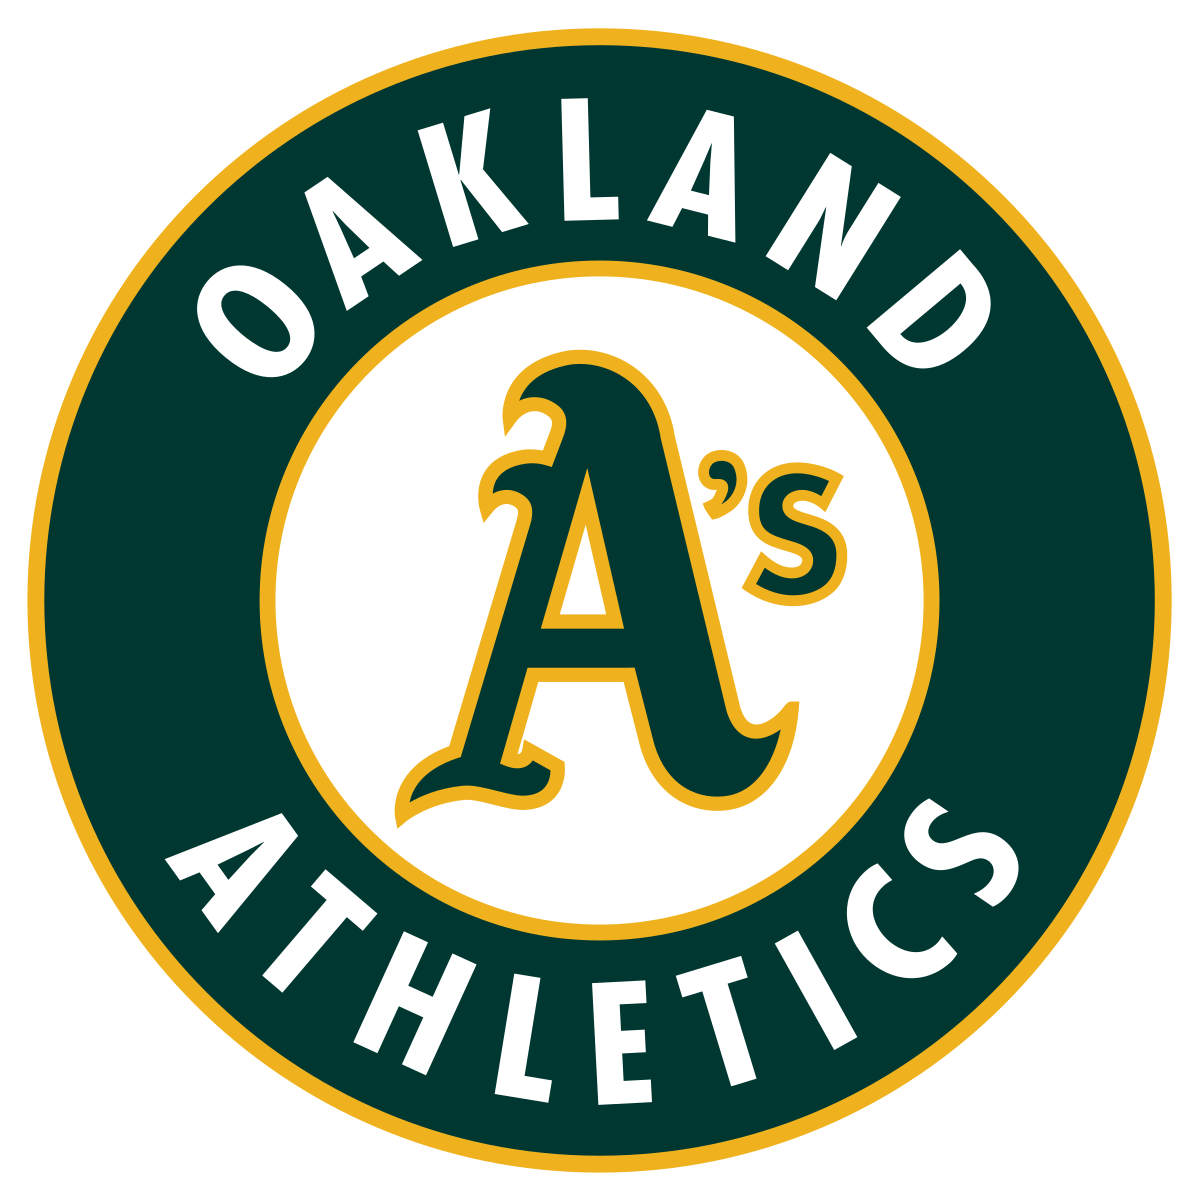 Oakland Athletics - Wikipedia